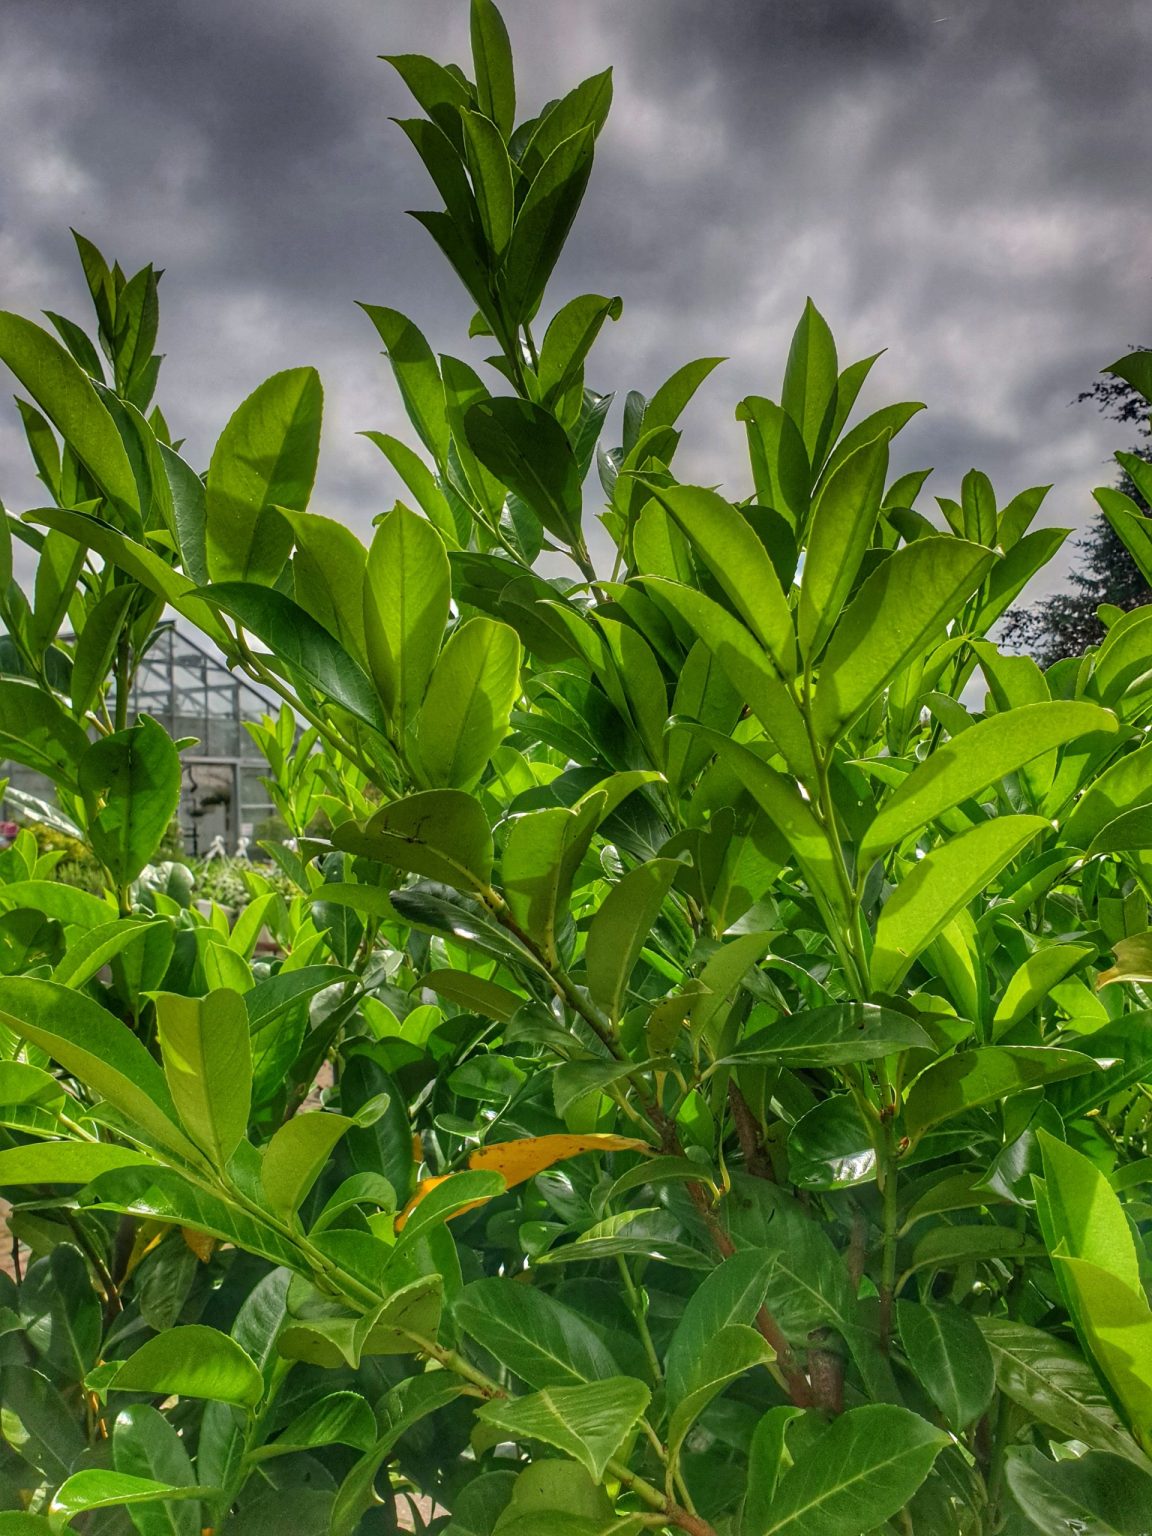 laurbaerkirsebaer-prunus-laurocerasus-rotundifolia